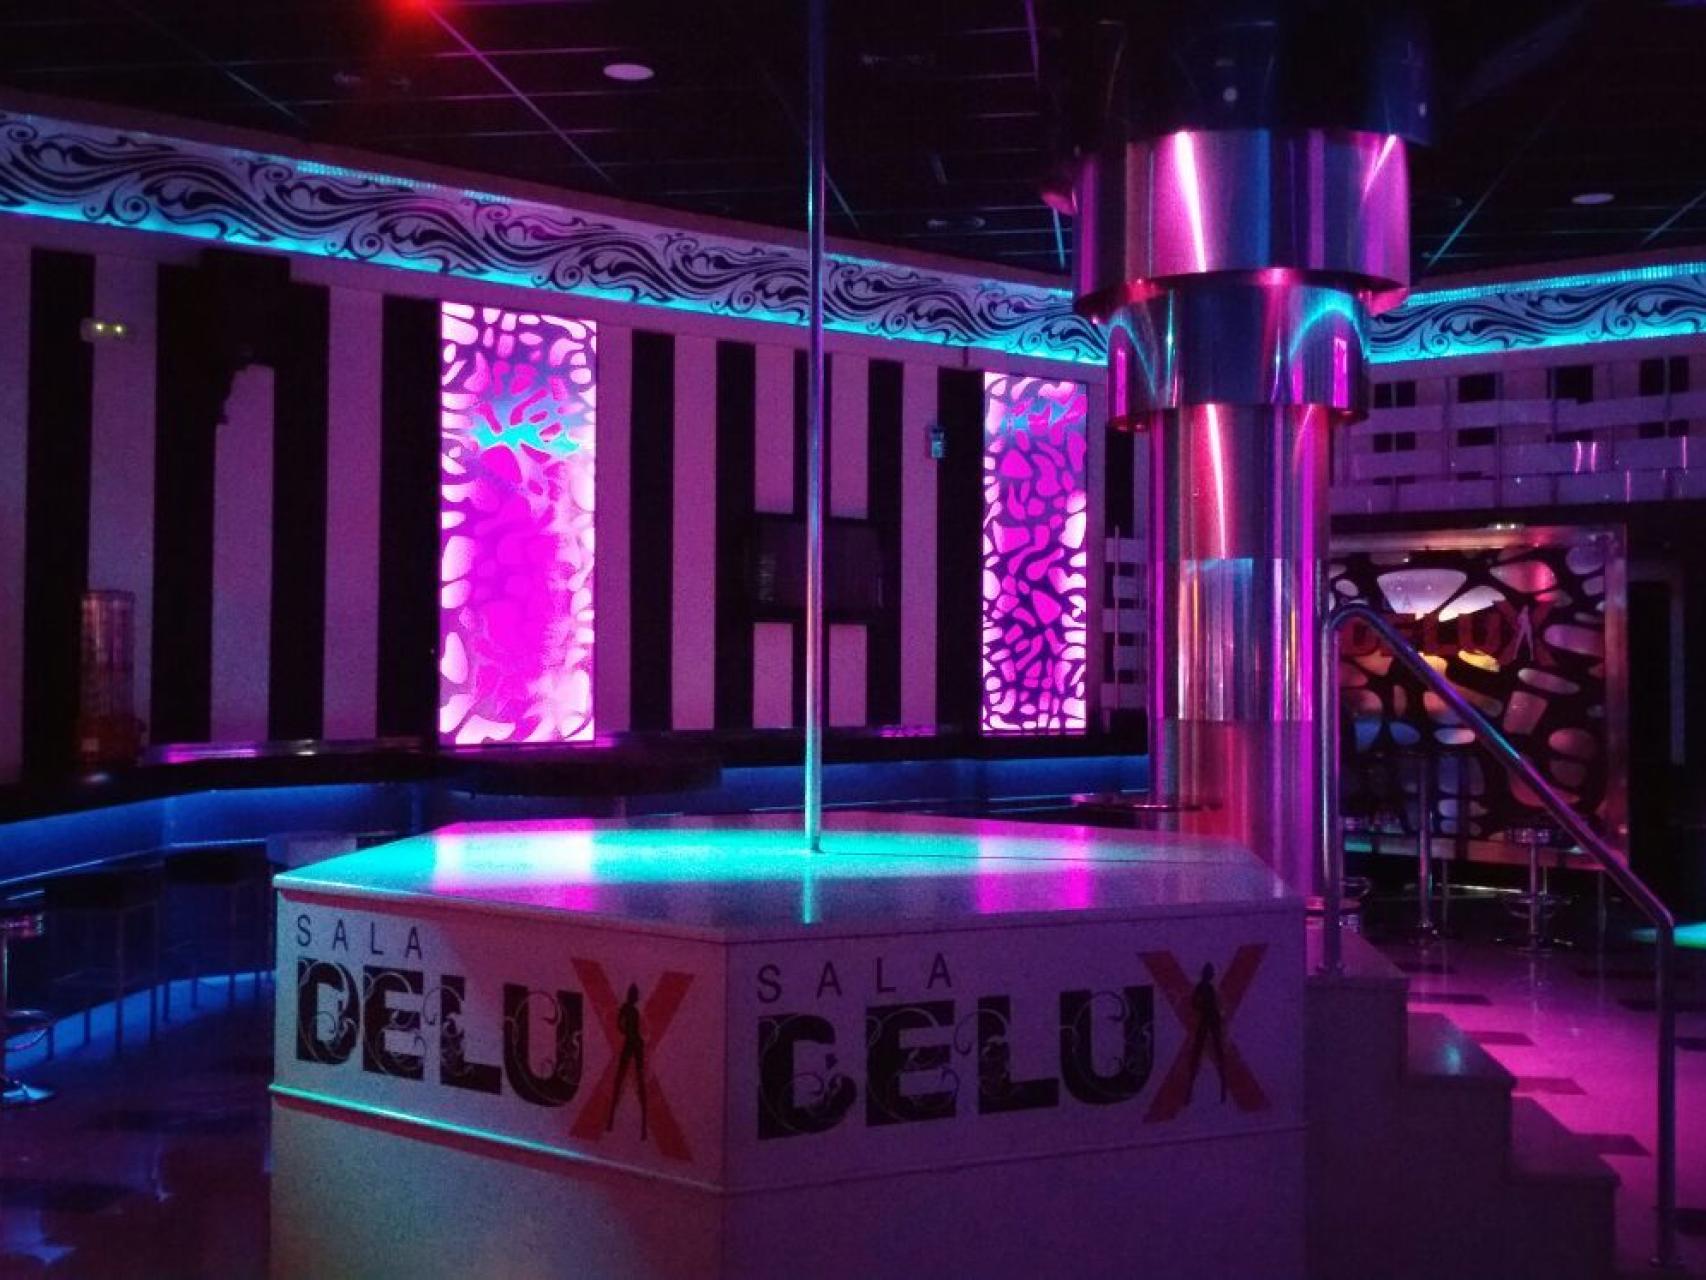 Sala de striptease del club de alterne Sala Delux, en Córdoba capital.